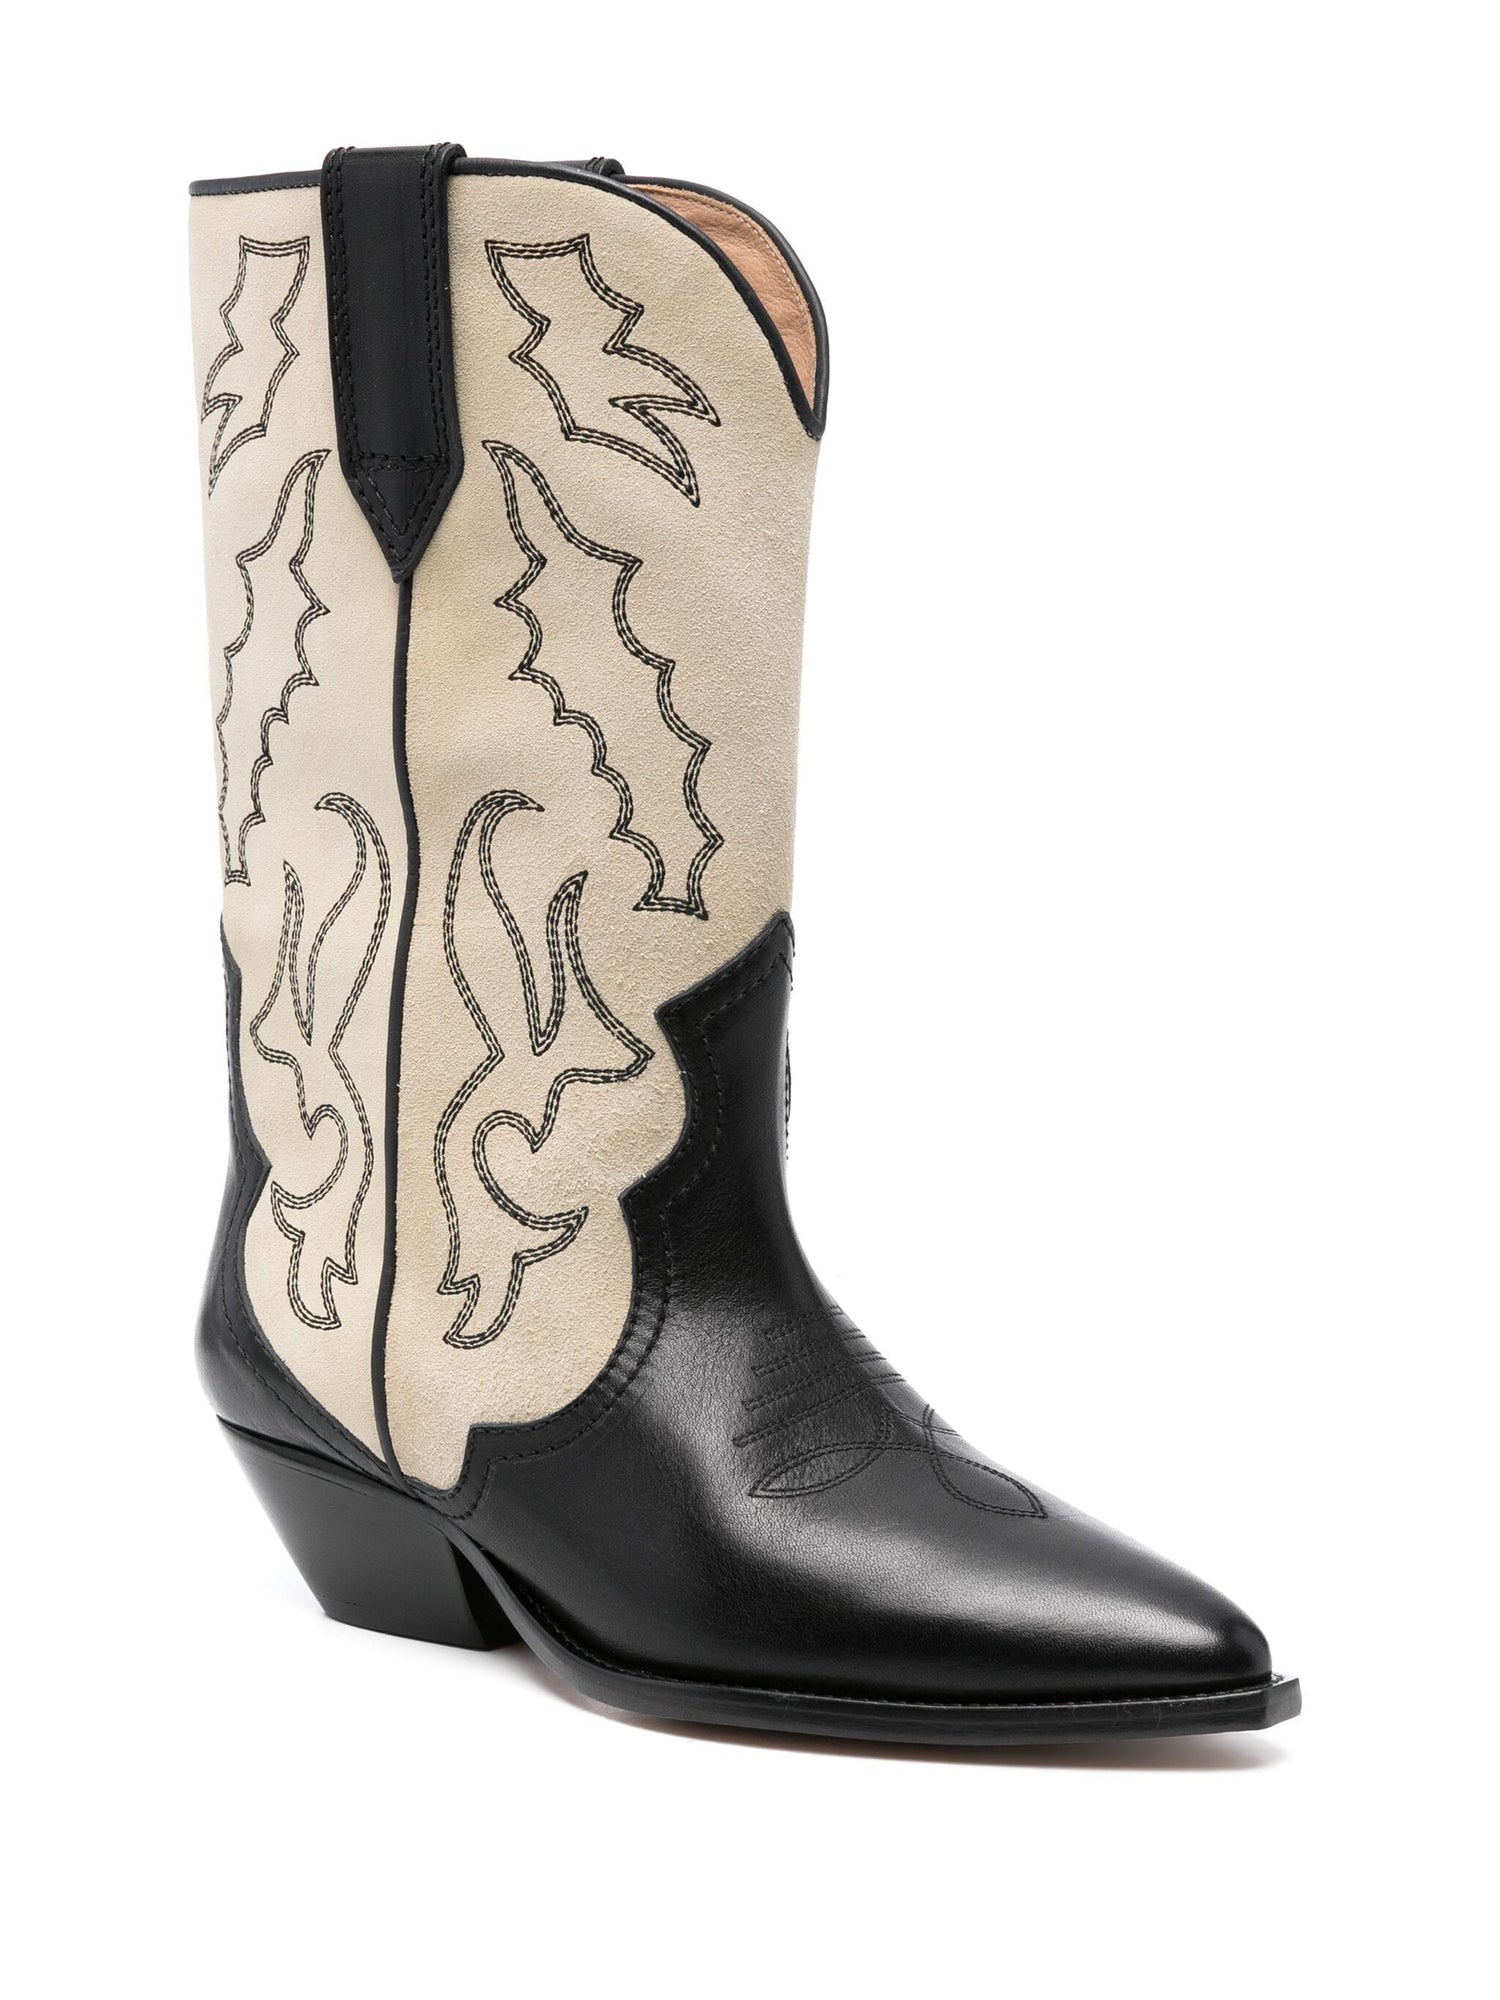 DUERTO cowboy boots, black/ecru